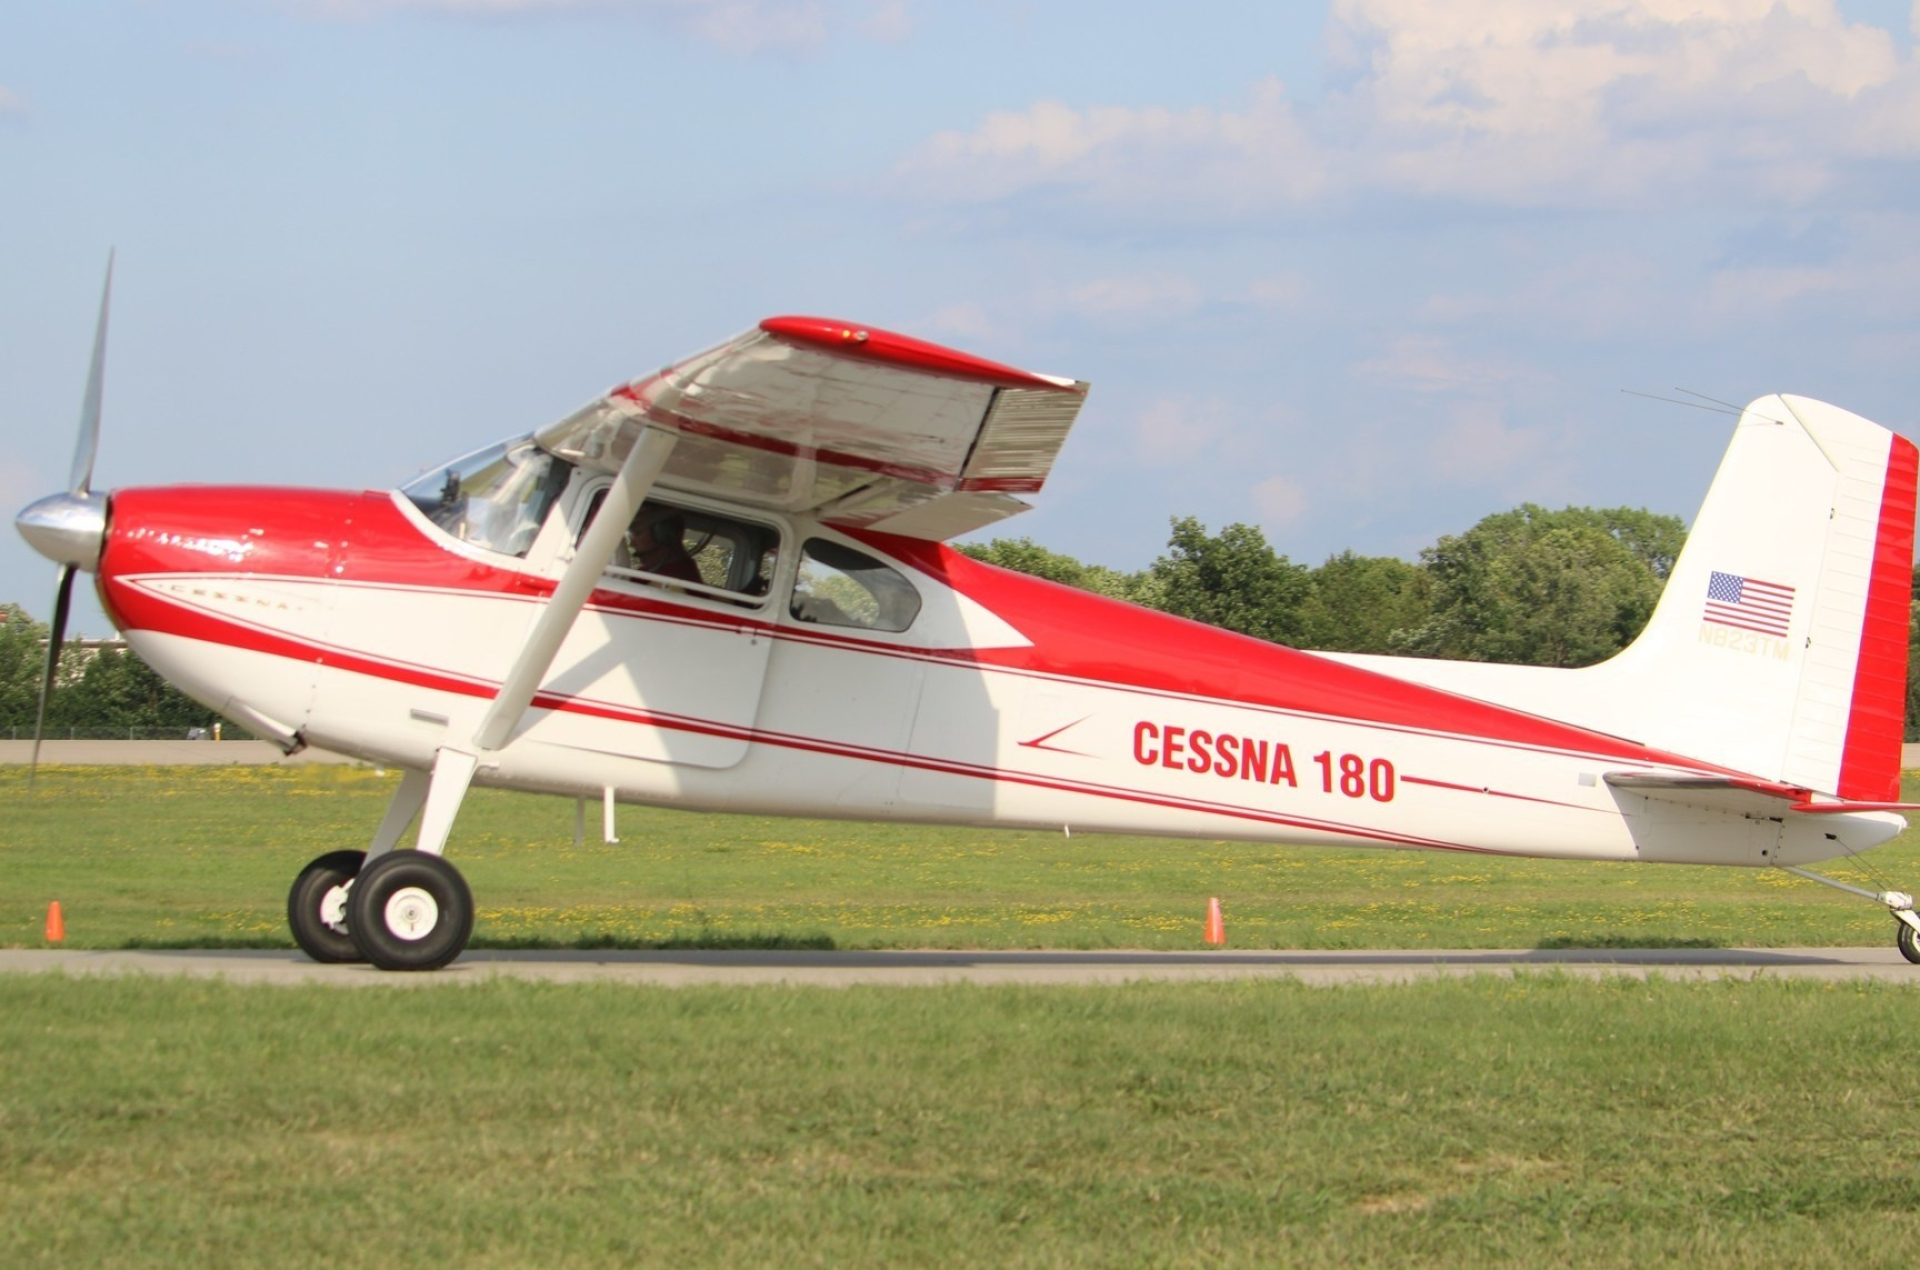 Cessna 180, N823tm, Cessna 180, Skywagon, 1920x1270 HD Desktop